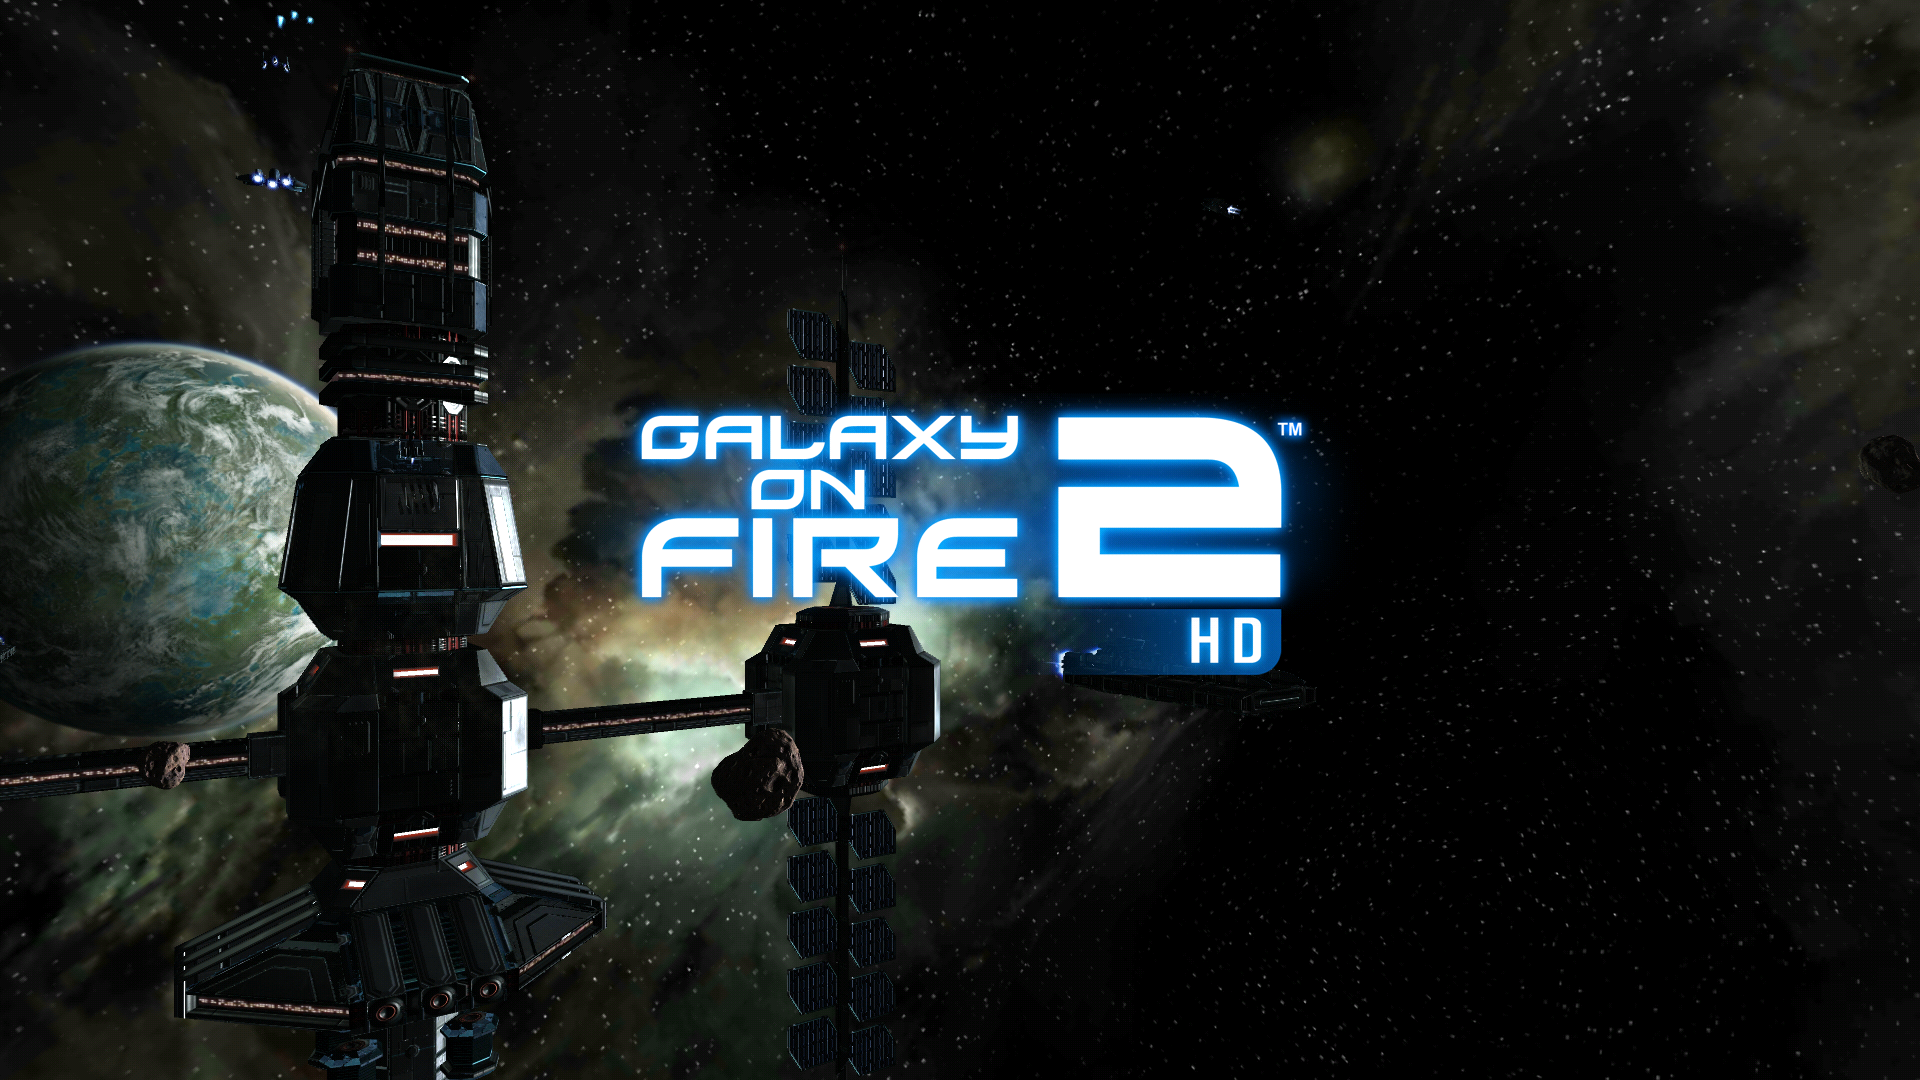 galaxy on fire 2 mod apk all levels infinite money